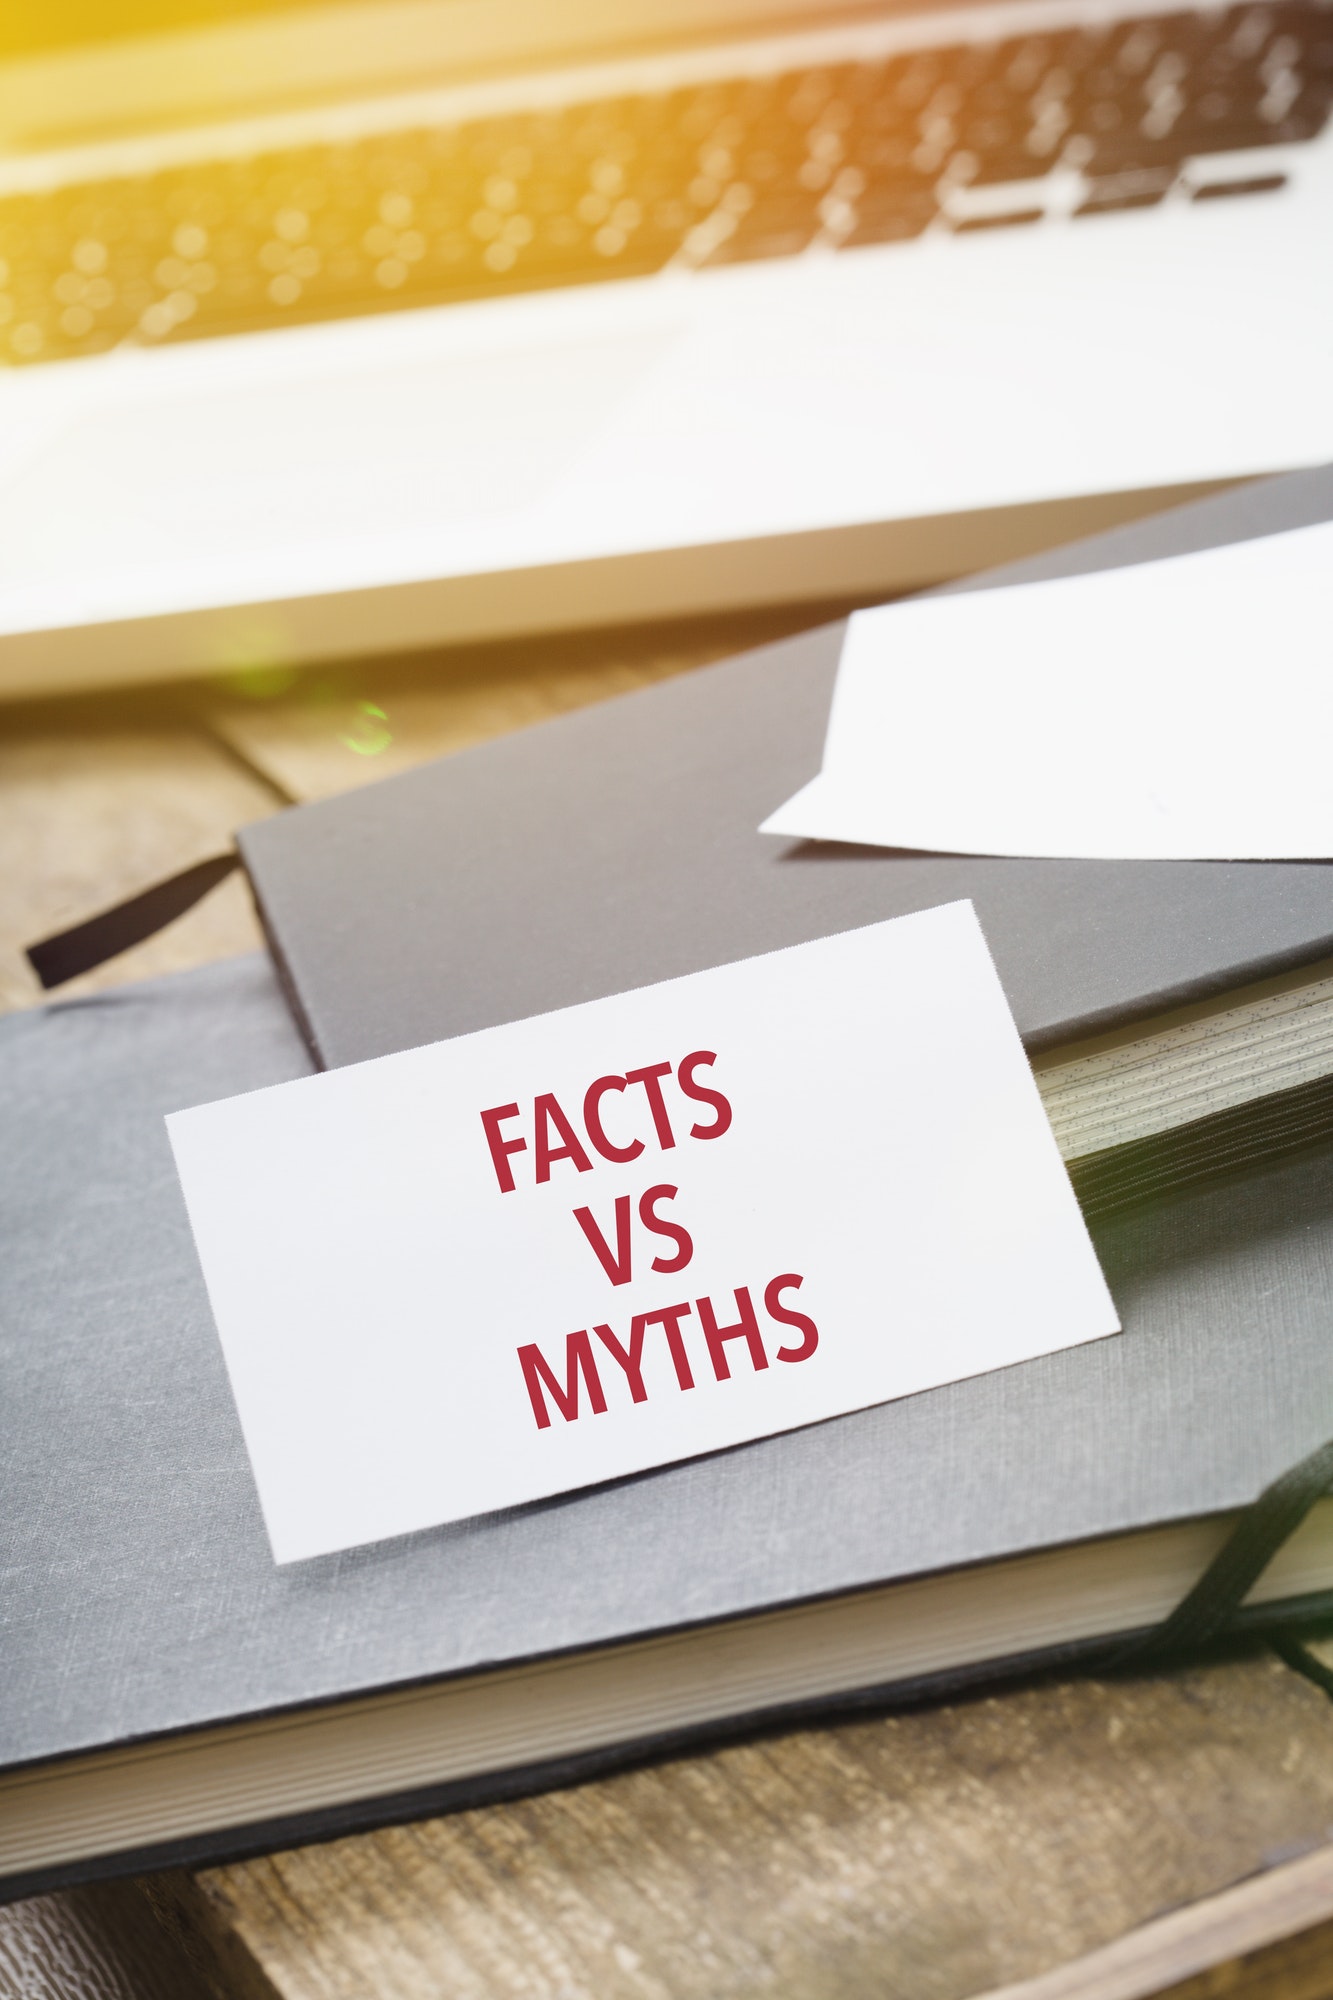 Facts vs Myths on card at office desktop